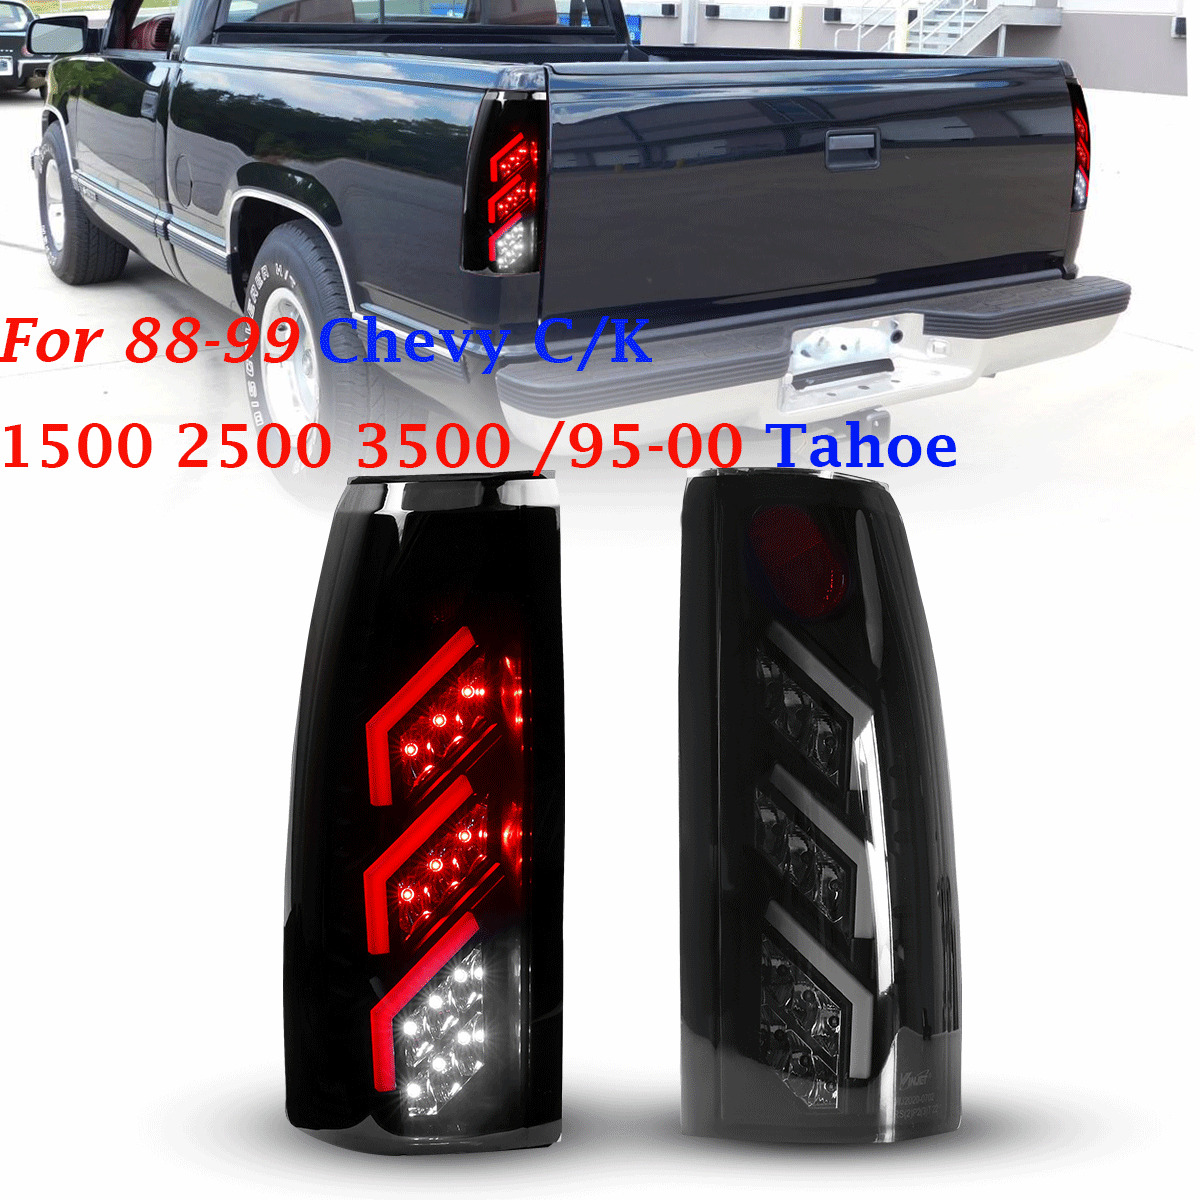 For 88-99 Chevy C/K1500 2500 3500 /95-00 Tahoe Tail Lights Rear Lamp Black/Smoke